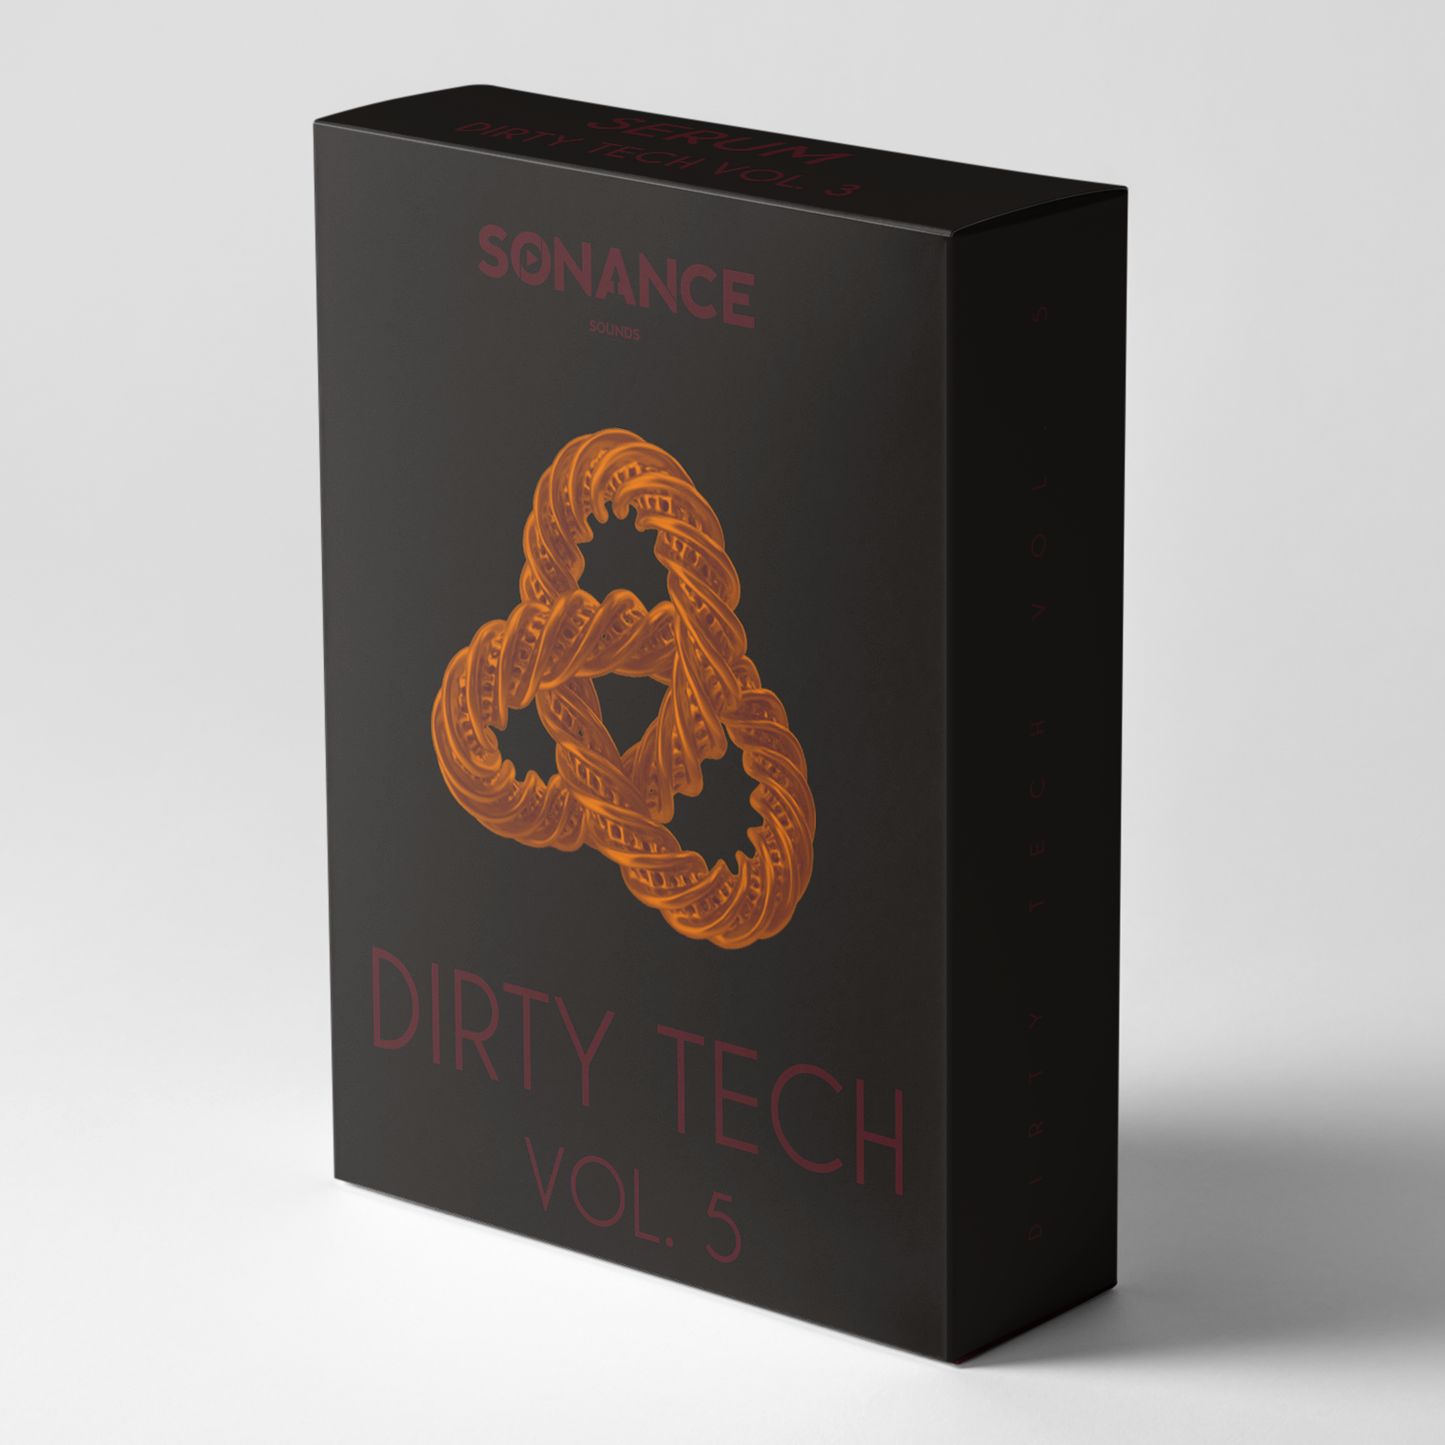 Sonance Sounds - Dirty Tech Vol. 5